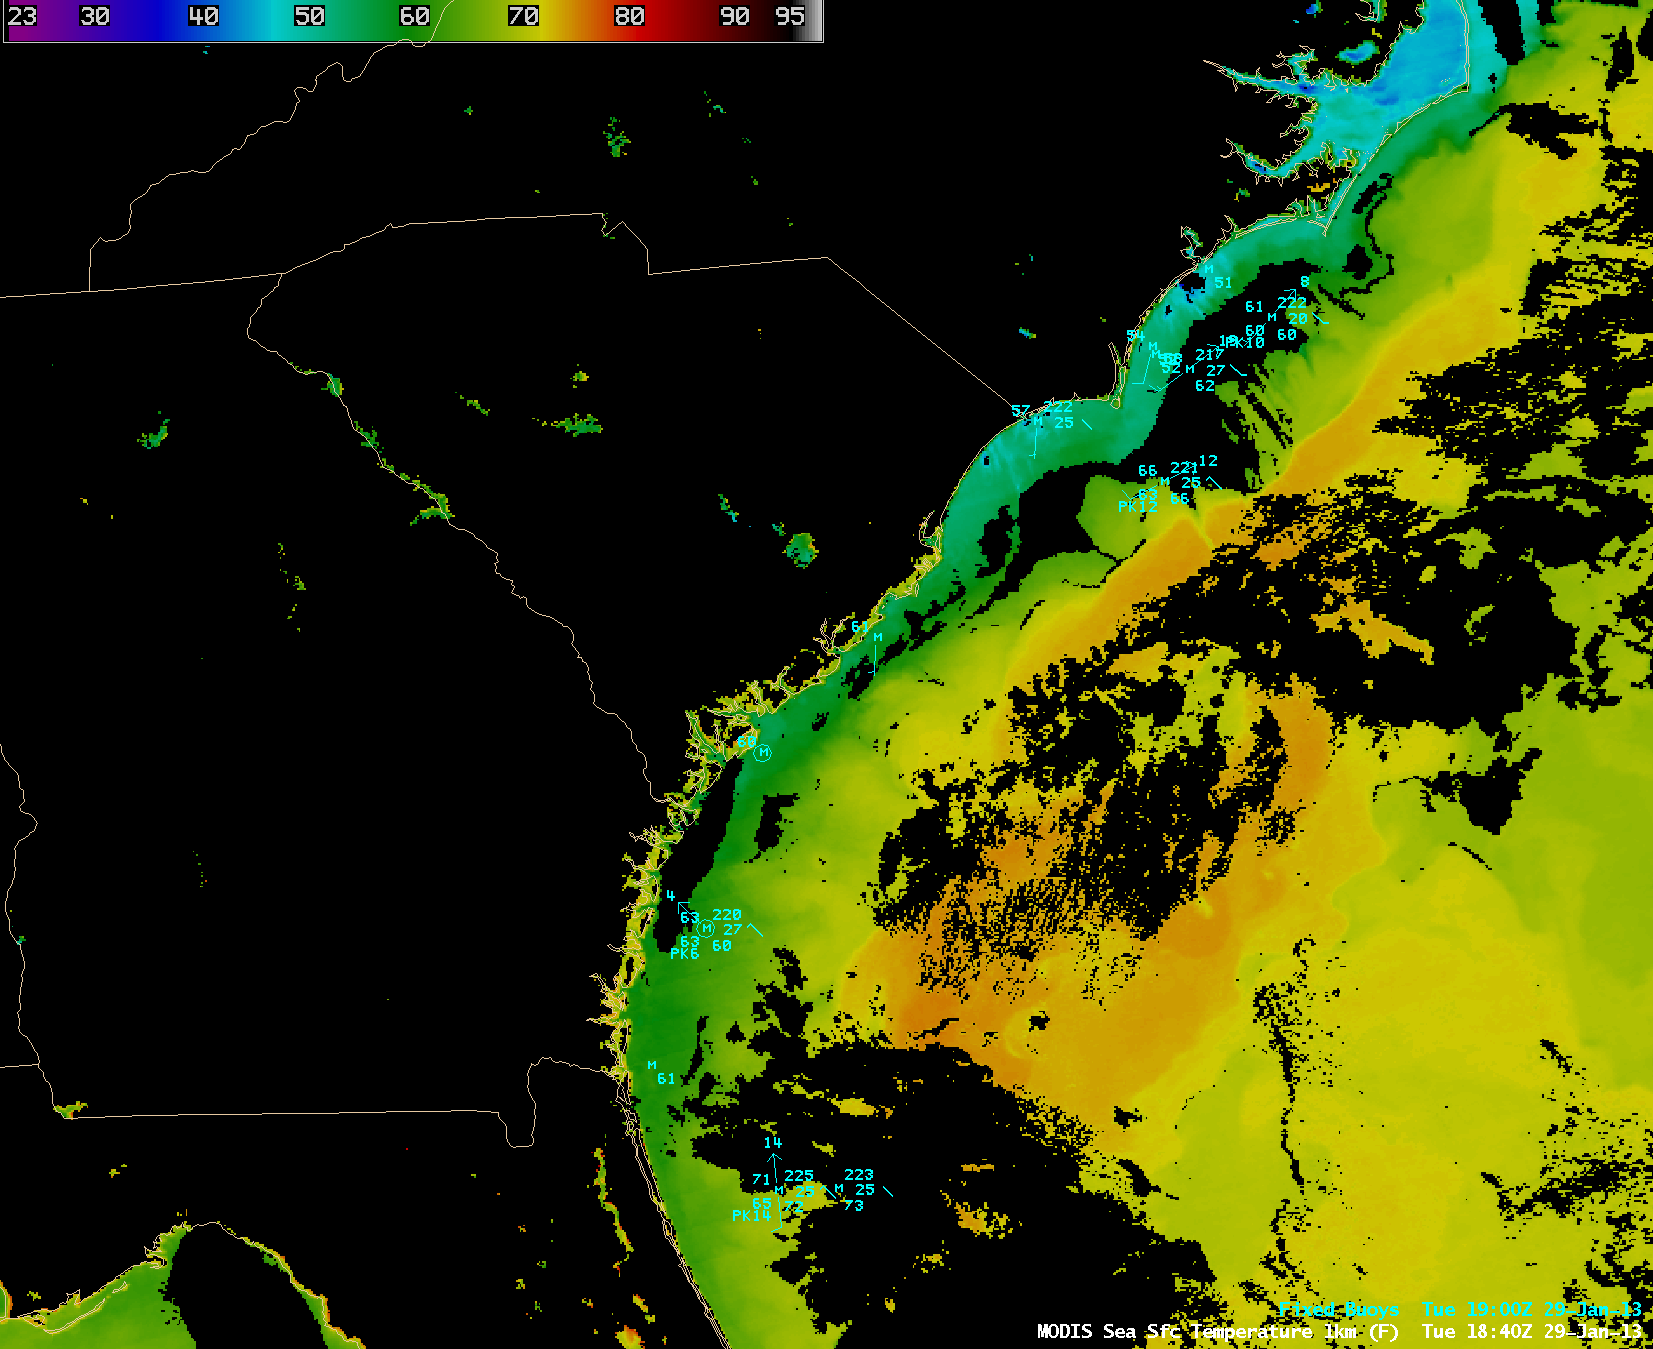 MODIS 0.65 Âµm visible channel image + MODIS Sea Surface Temperature product